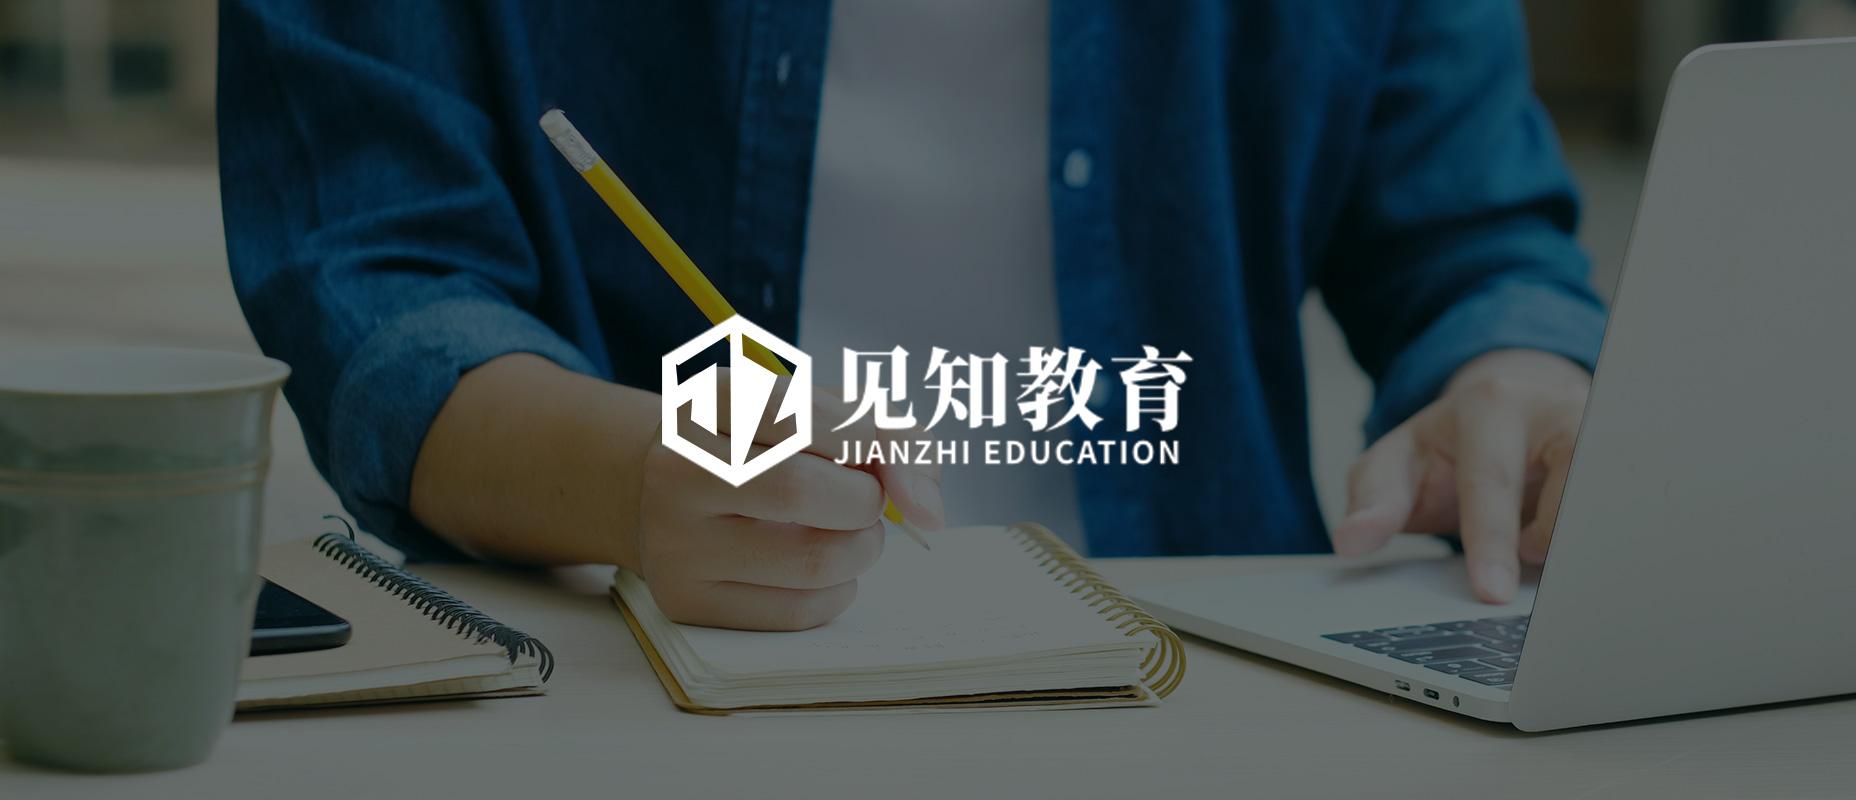 IPO ของ Jianzhi Education Technology: แพลตฟอร์มการศึกษาจากประเทศจีน